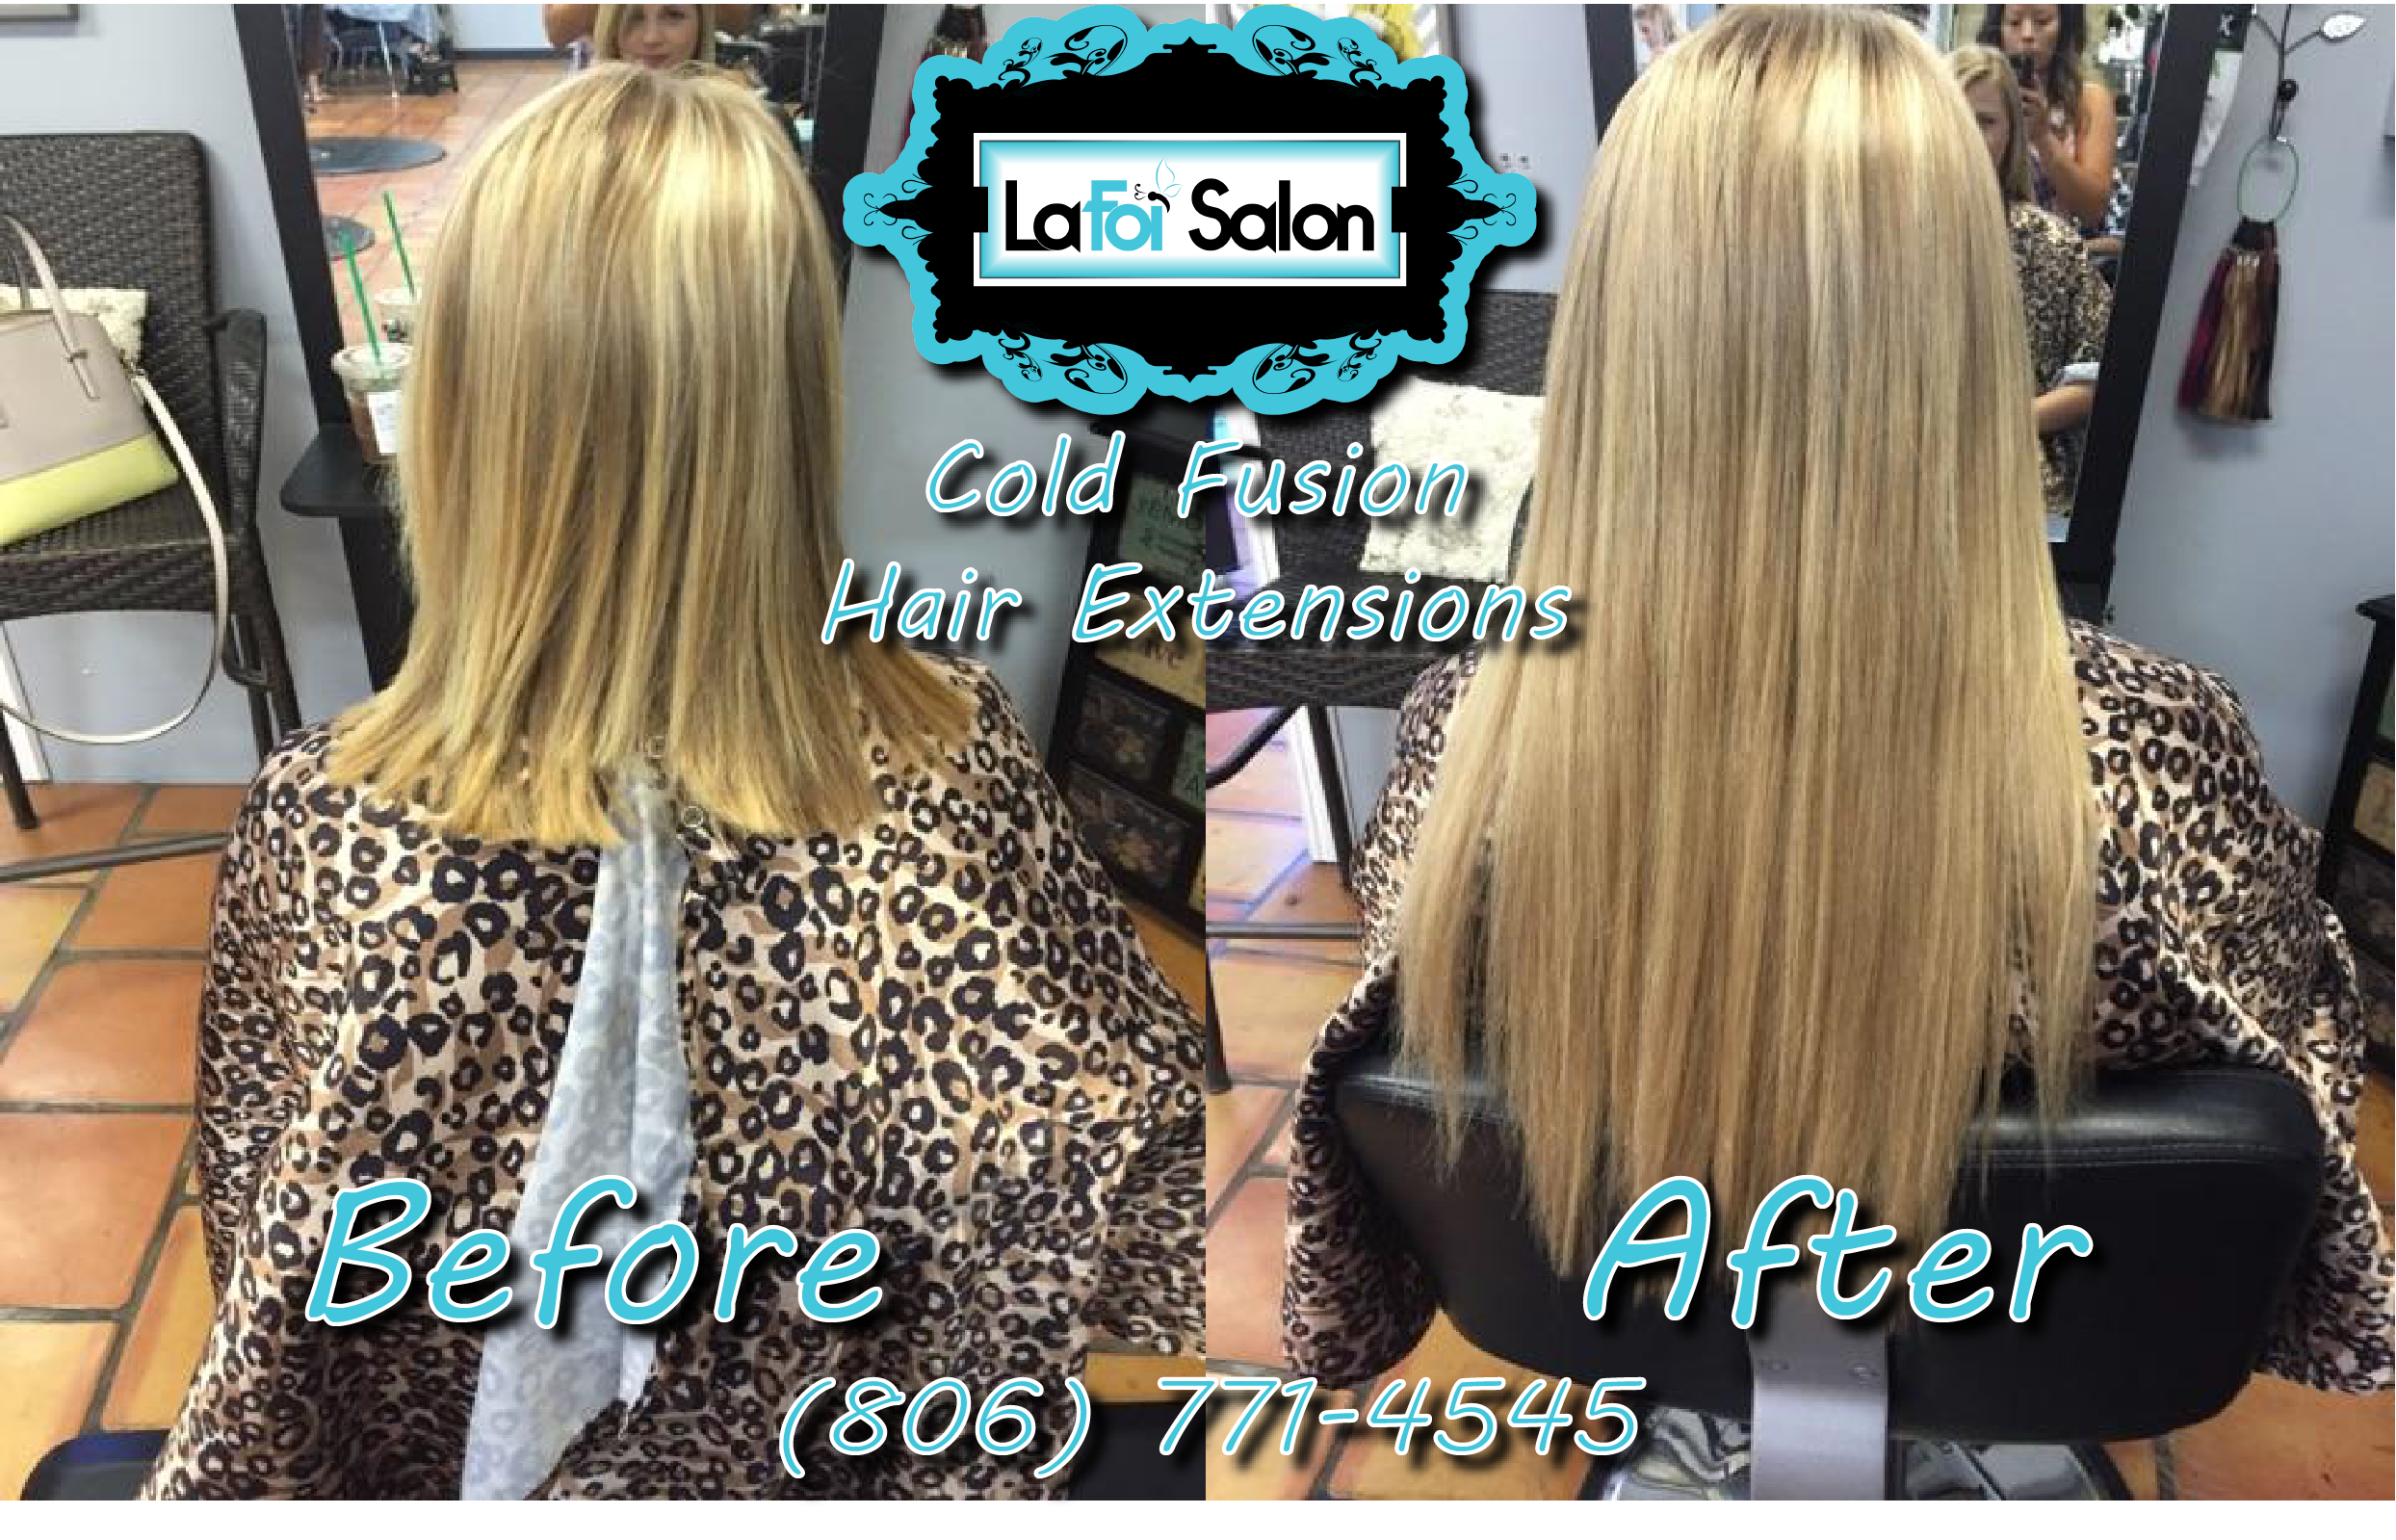 Check out these Beautiful Blonde Extensions!!! By: LeeAnn Floyd www.lafoisalon.com  lafoisalon  hairsalonslubbock  hairextensionslubbockï»¿